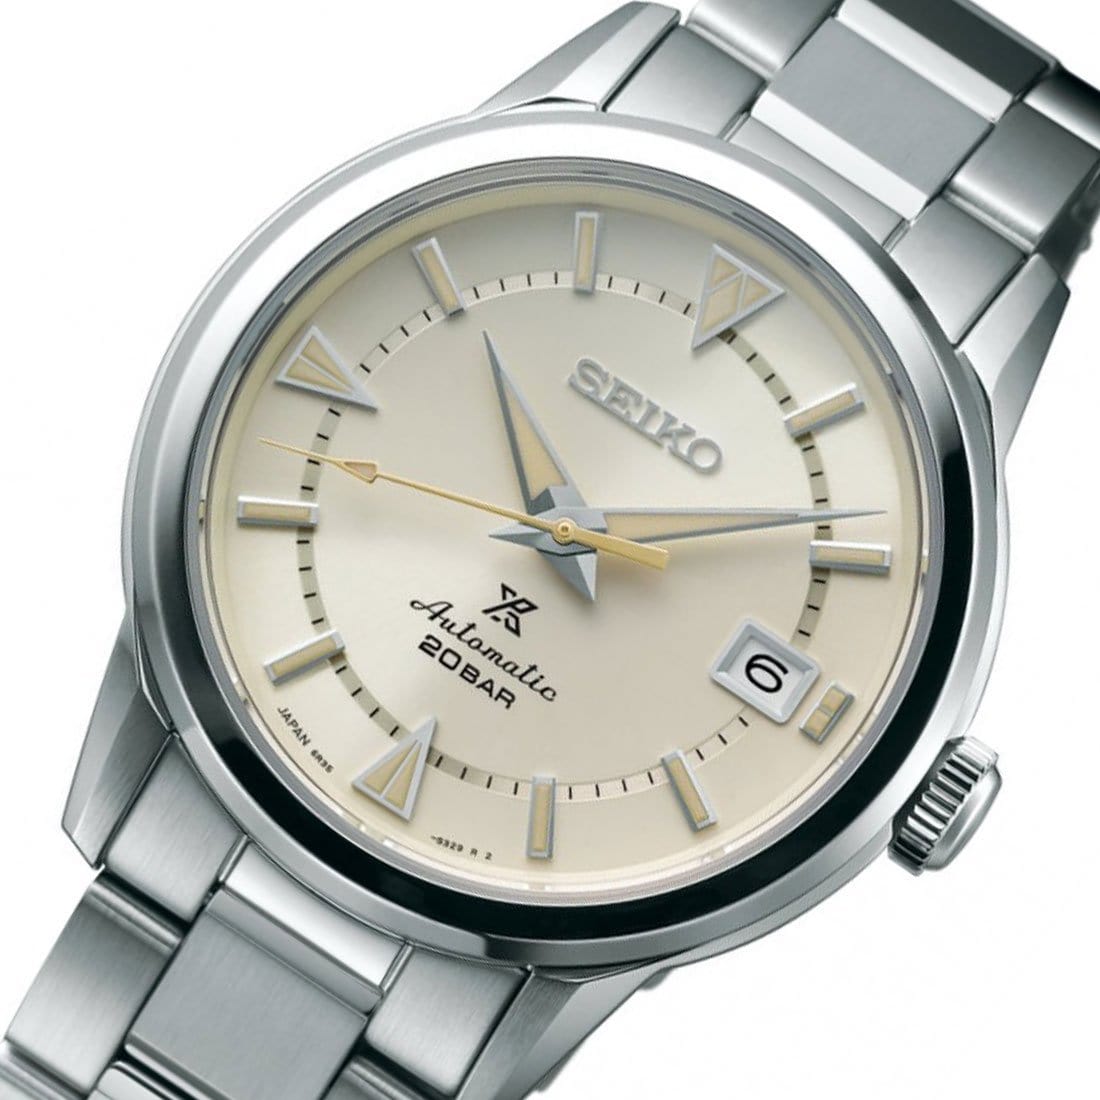 Seiko SBDC145 Prospex Alpinist Contemporary Automatic 24 Jewels Beige Dial JDM Watch